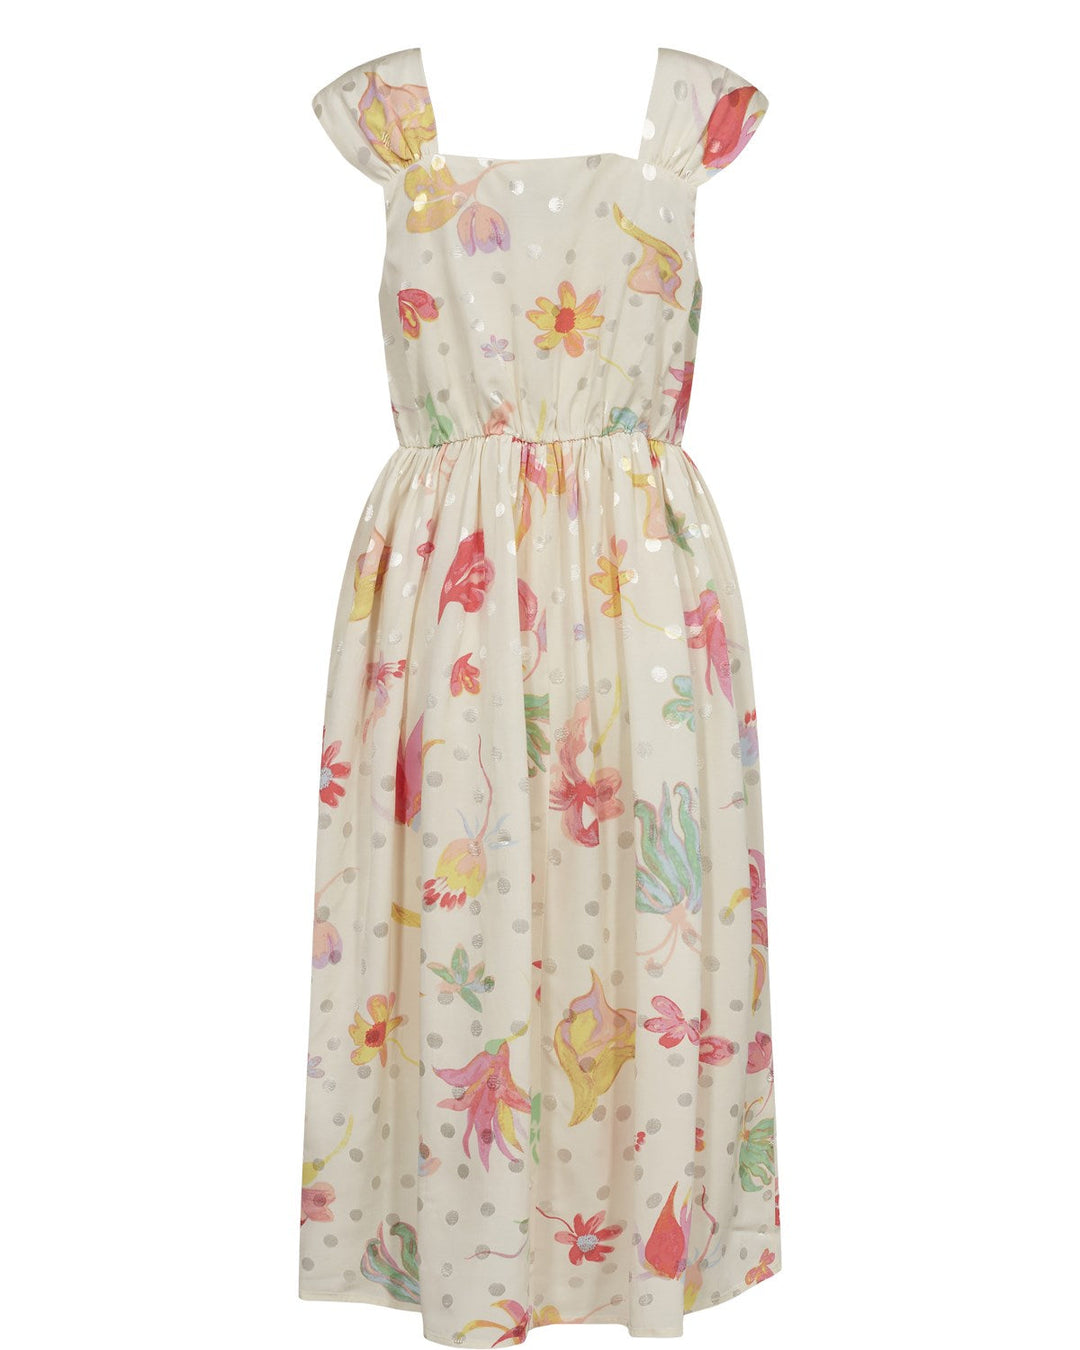 Numph Numoira Pristine Cream Flower Dress